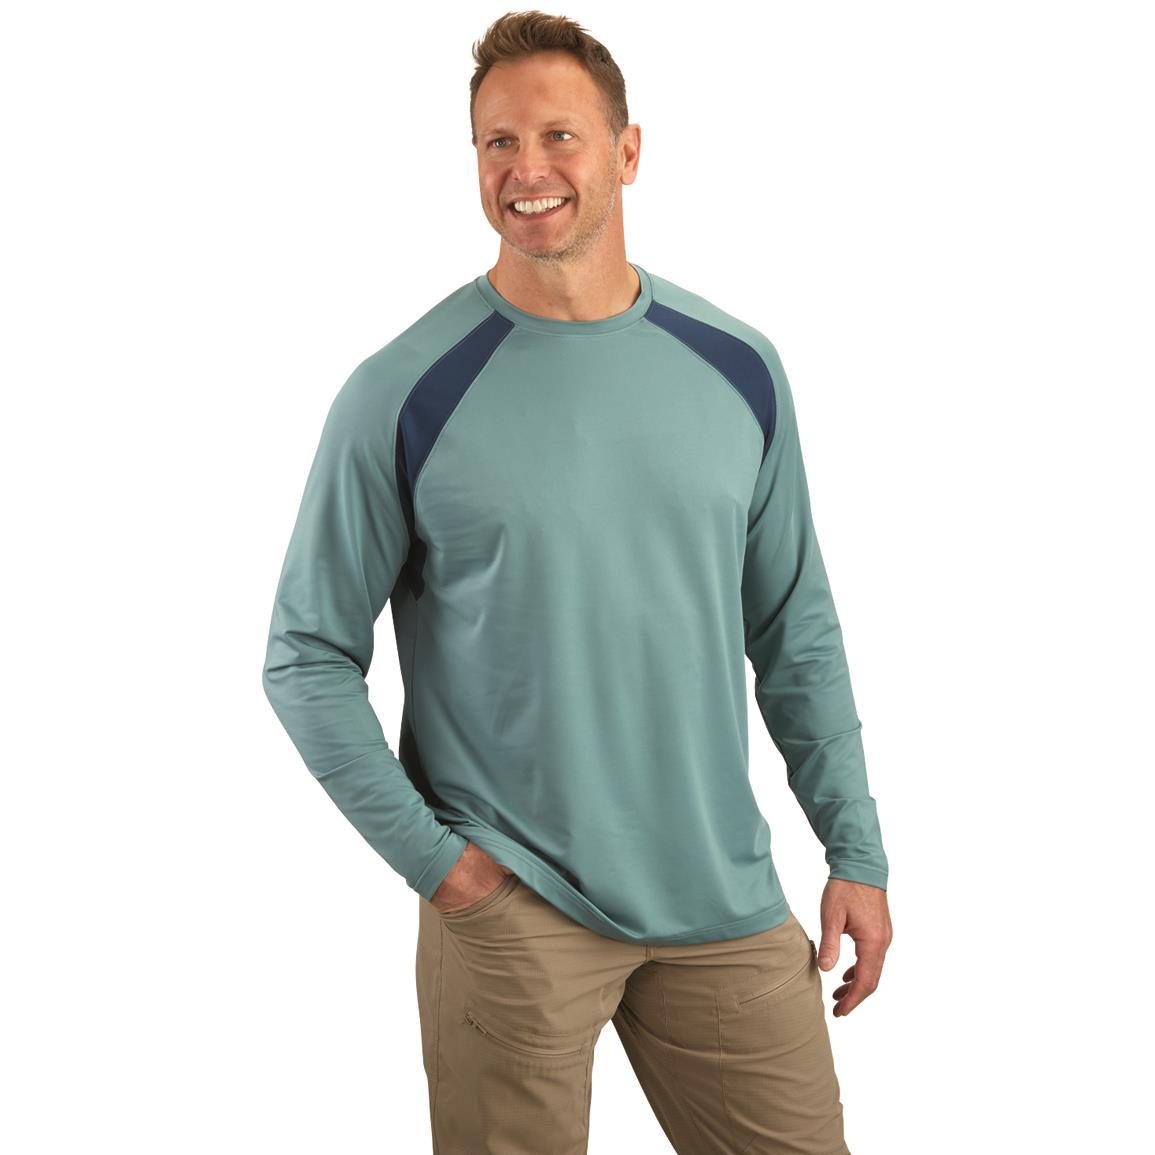 Guide Gear Men's Performance Fishing/UPF shirts Long Sleeve Shirt, Oil Blue